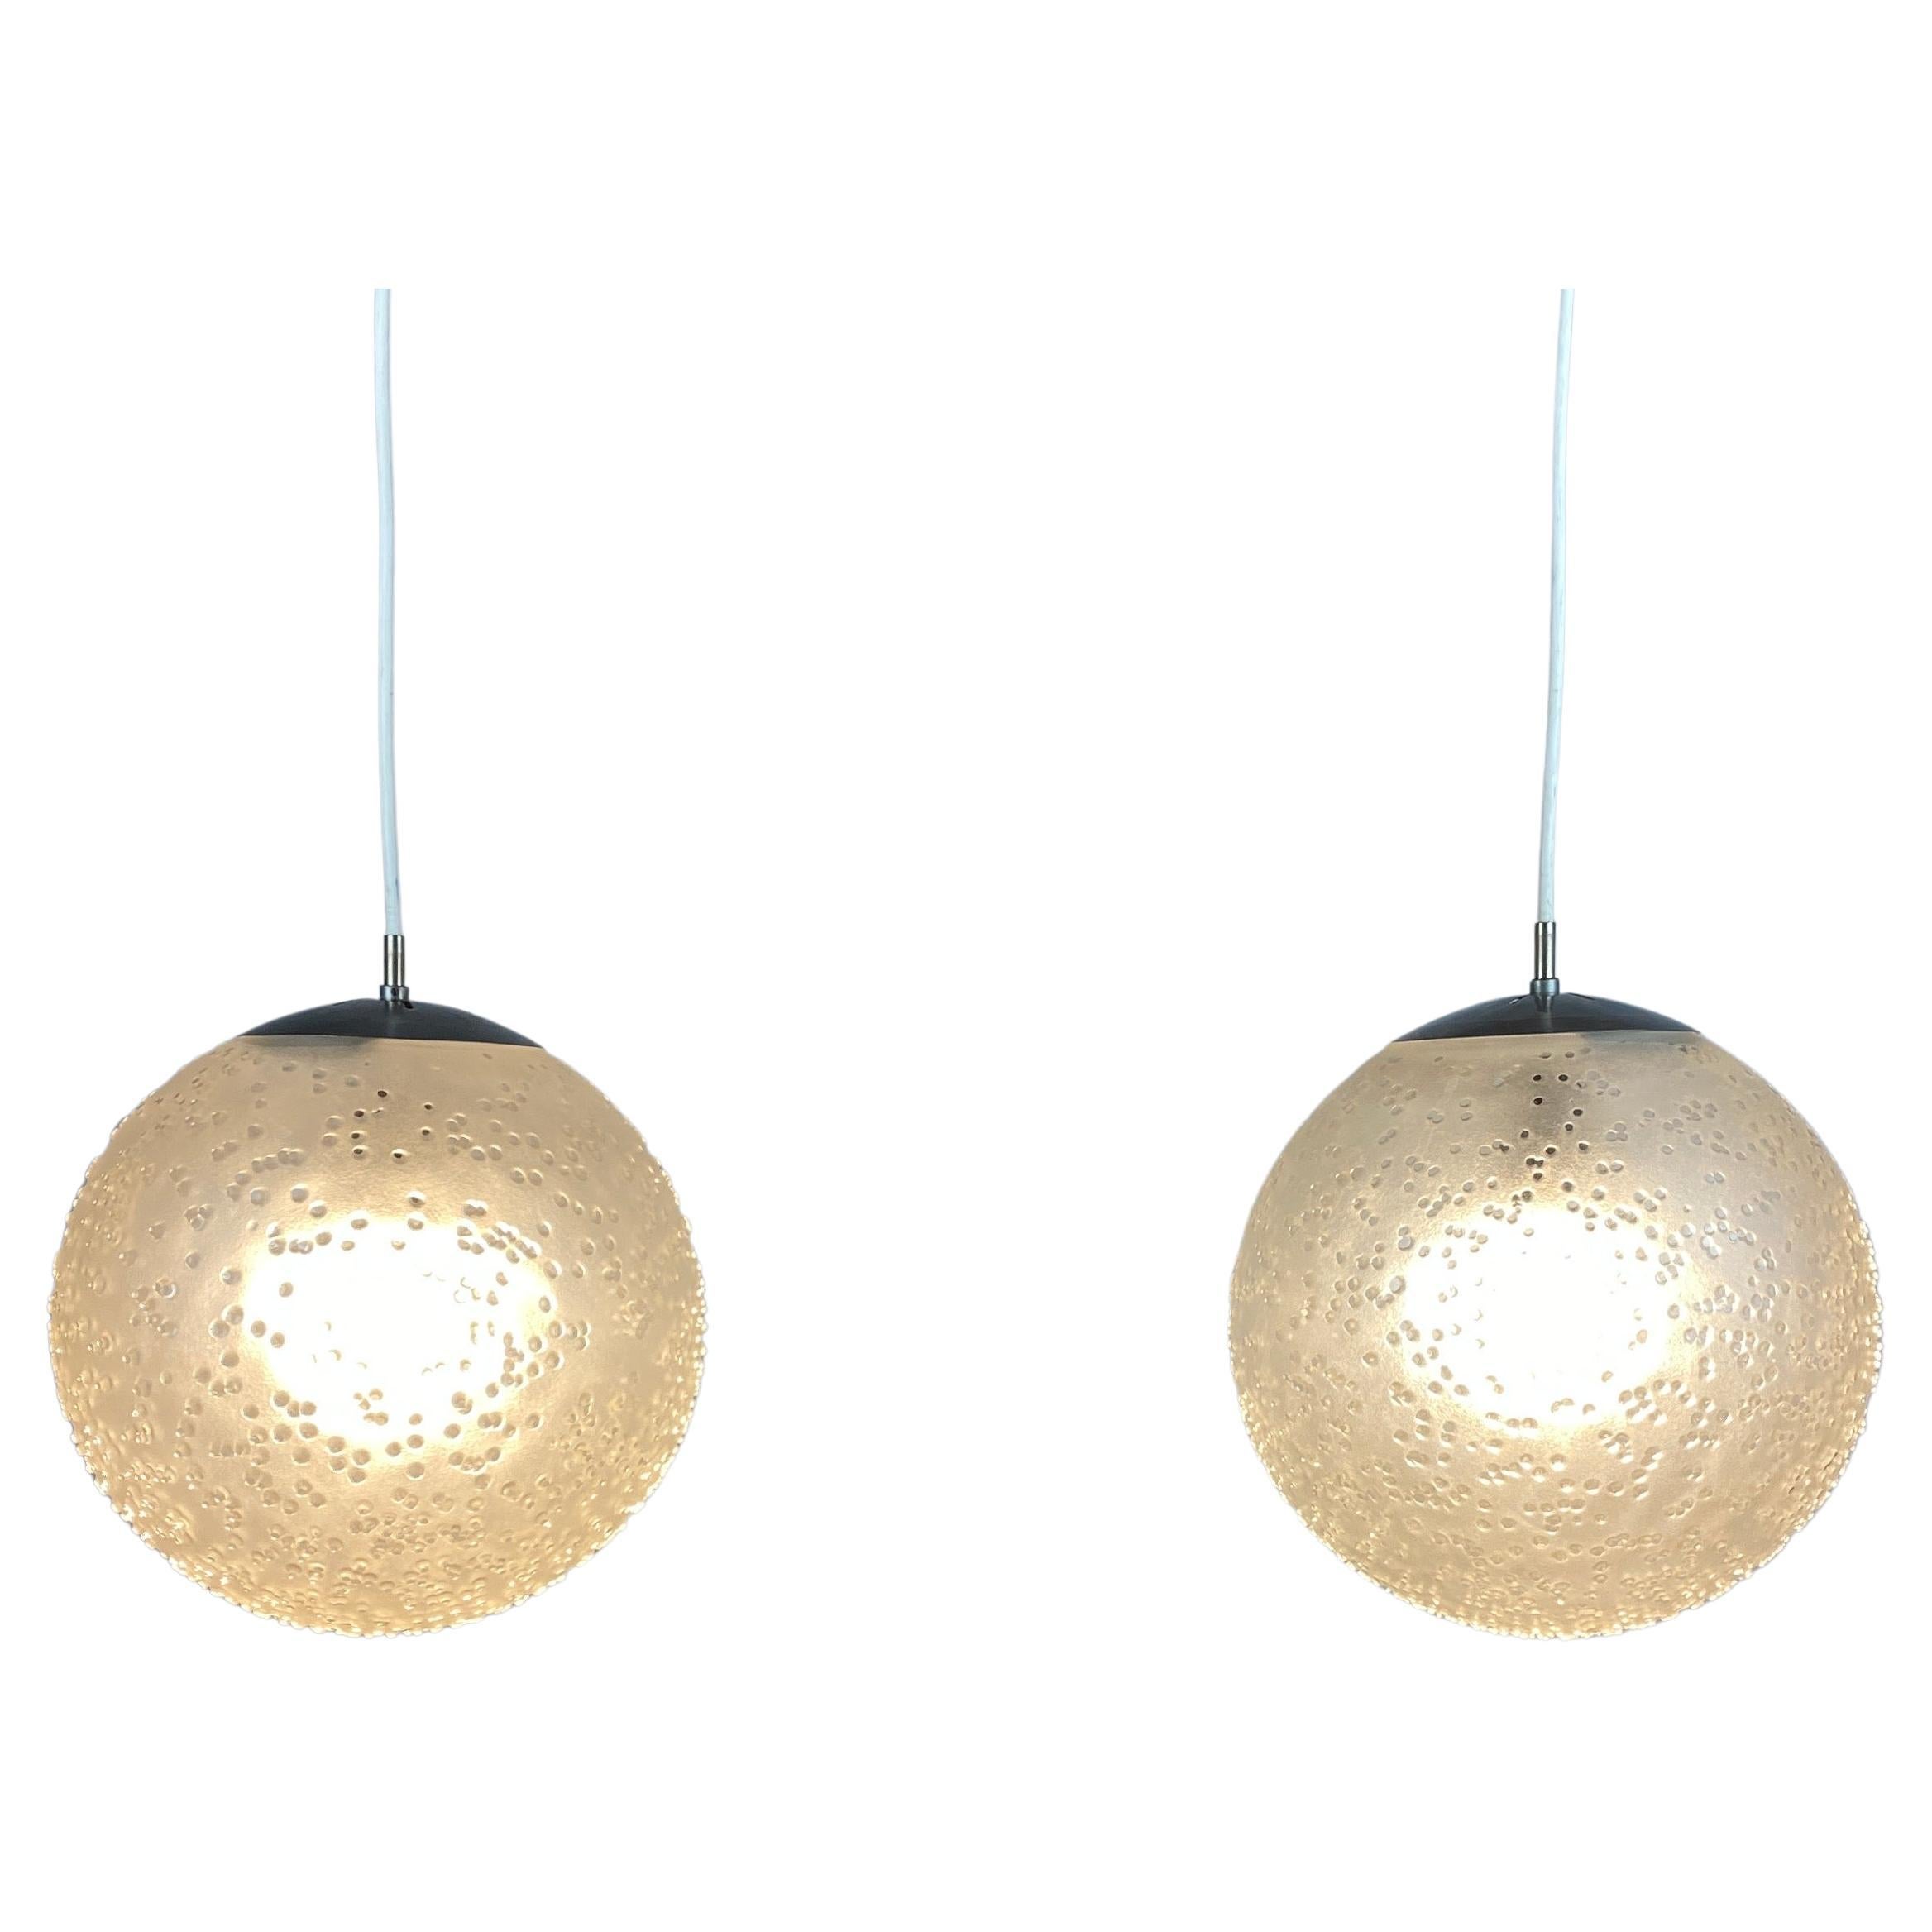 Pair of Two Large Pendant Lights 'Patmos' by Horst Tüselmann for Peill & Putzler